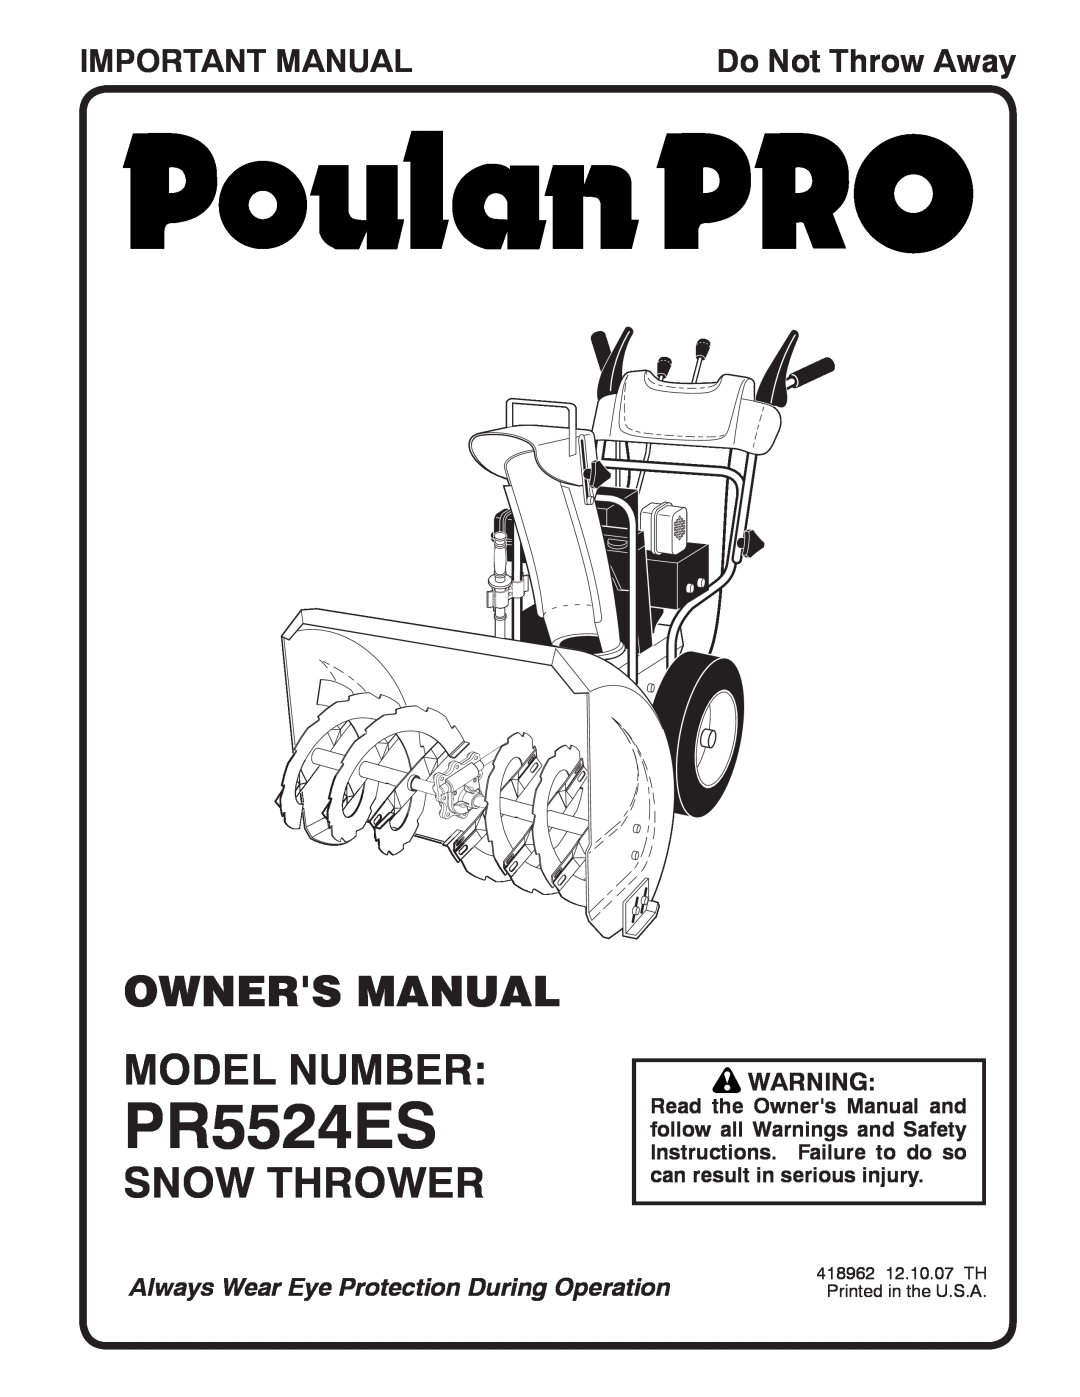 Poulan 418962 owner manual Snow Thrower, Important Manual, PR5524ES, Do Not Throw Away 